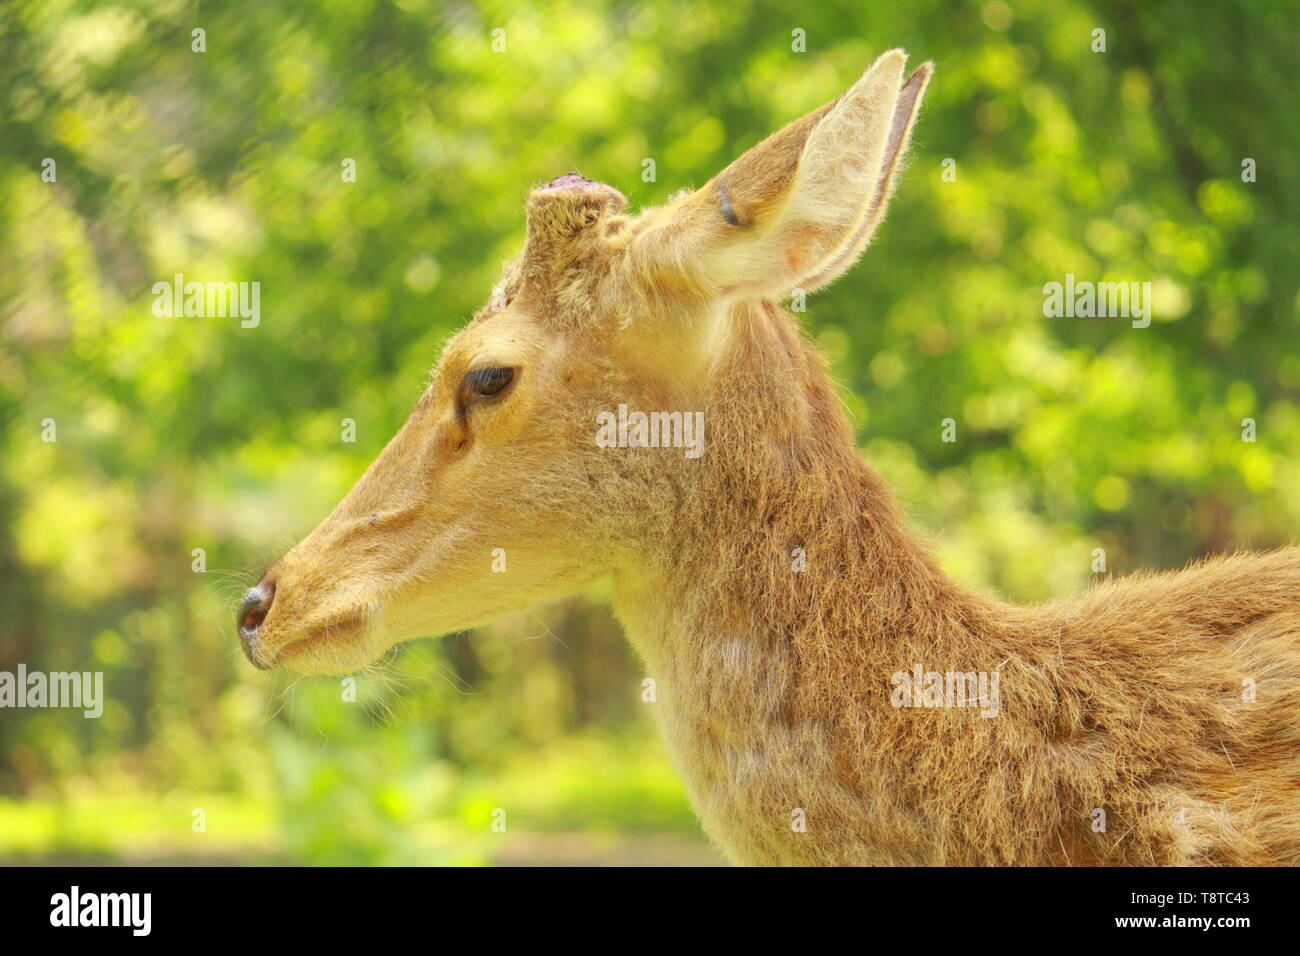 Deer hd photo Stock Photo